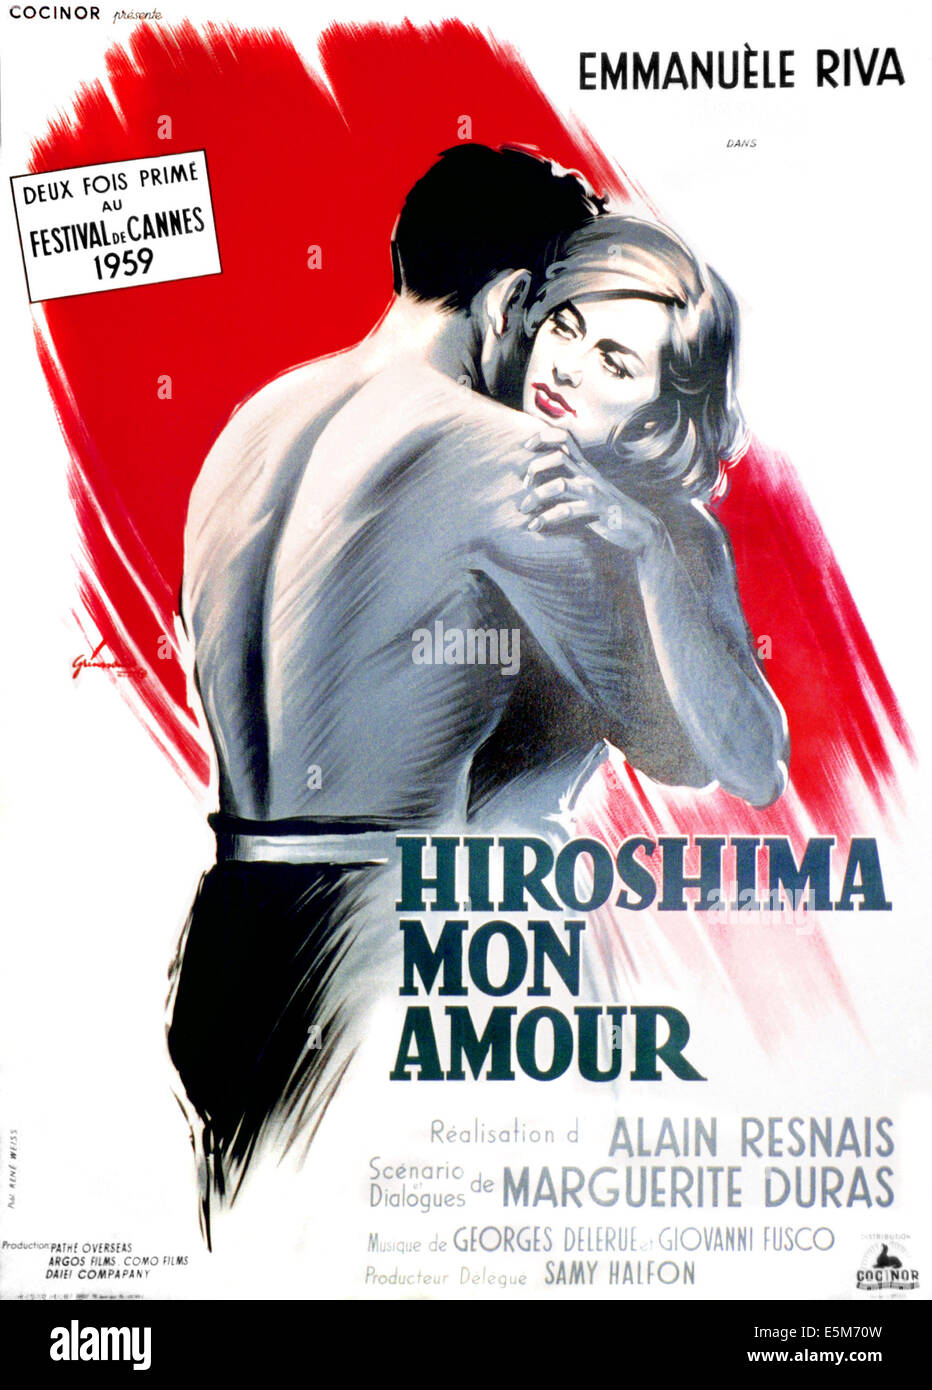 hiroshima-mon-amour-french-poster-art-19